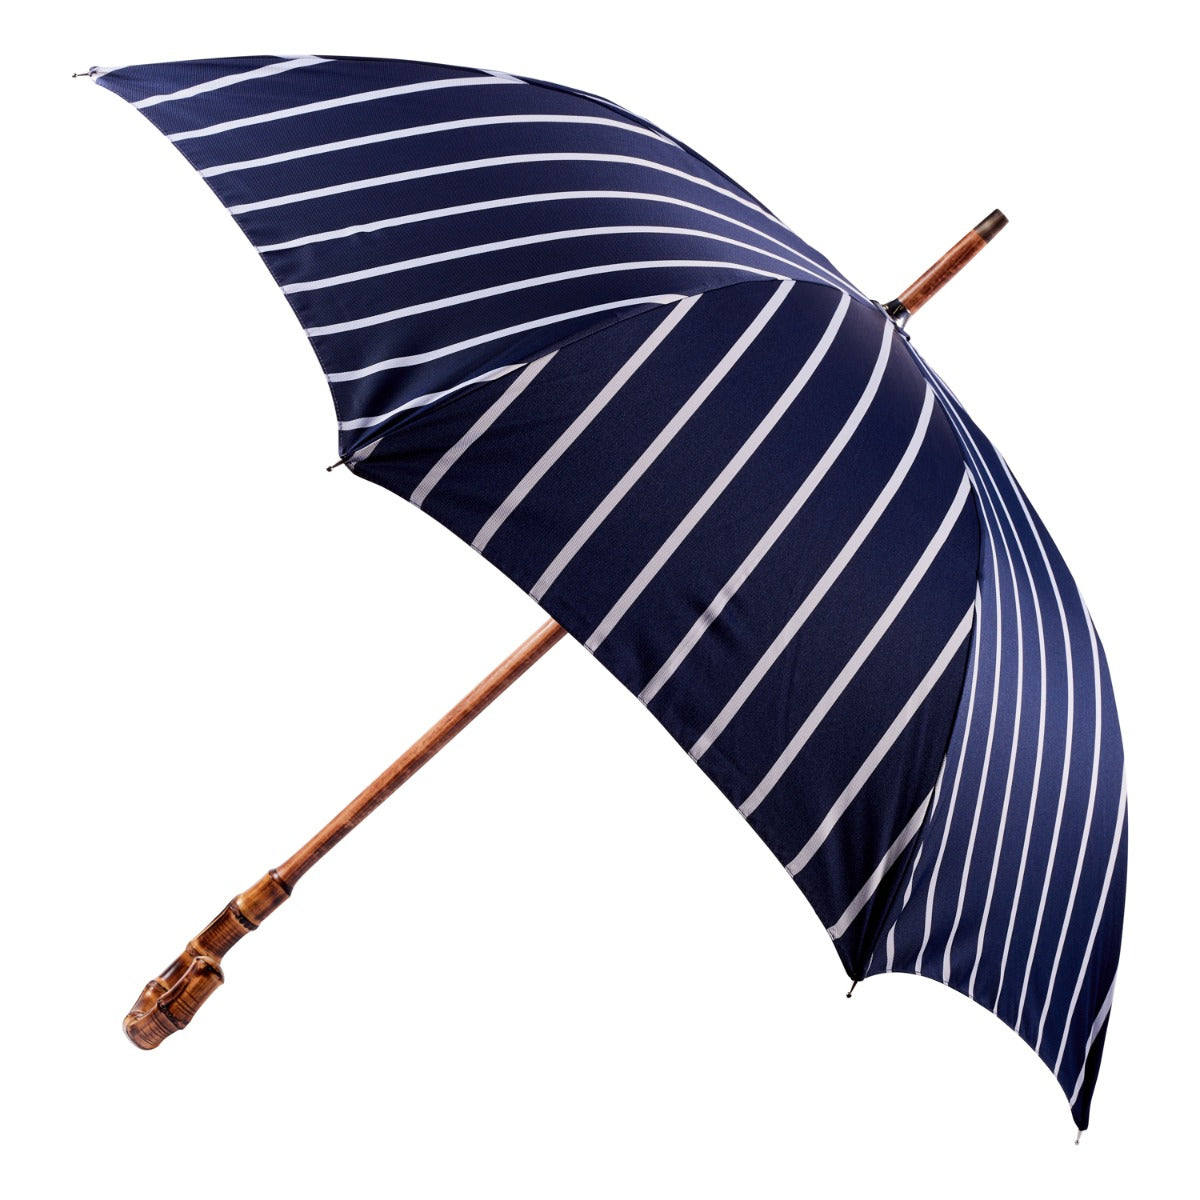 A Navy Pin Stripe KirbyAllison.com umbrella with a bamboo handle.